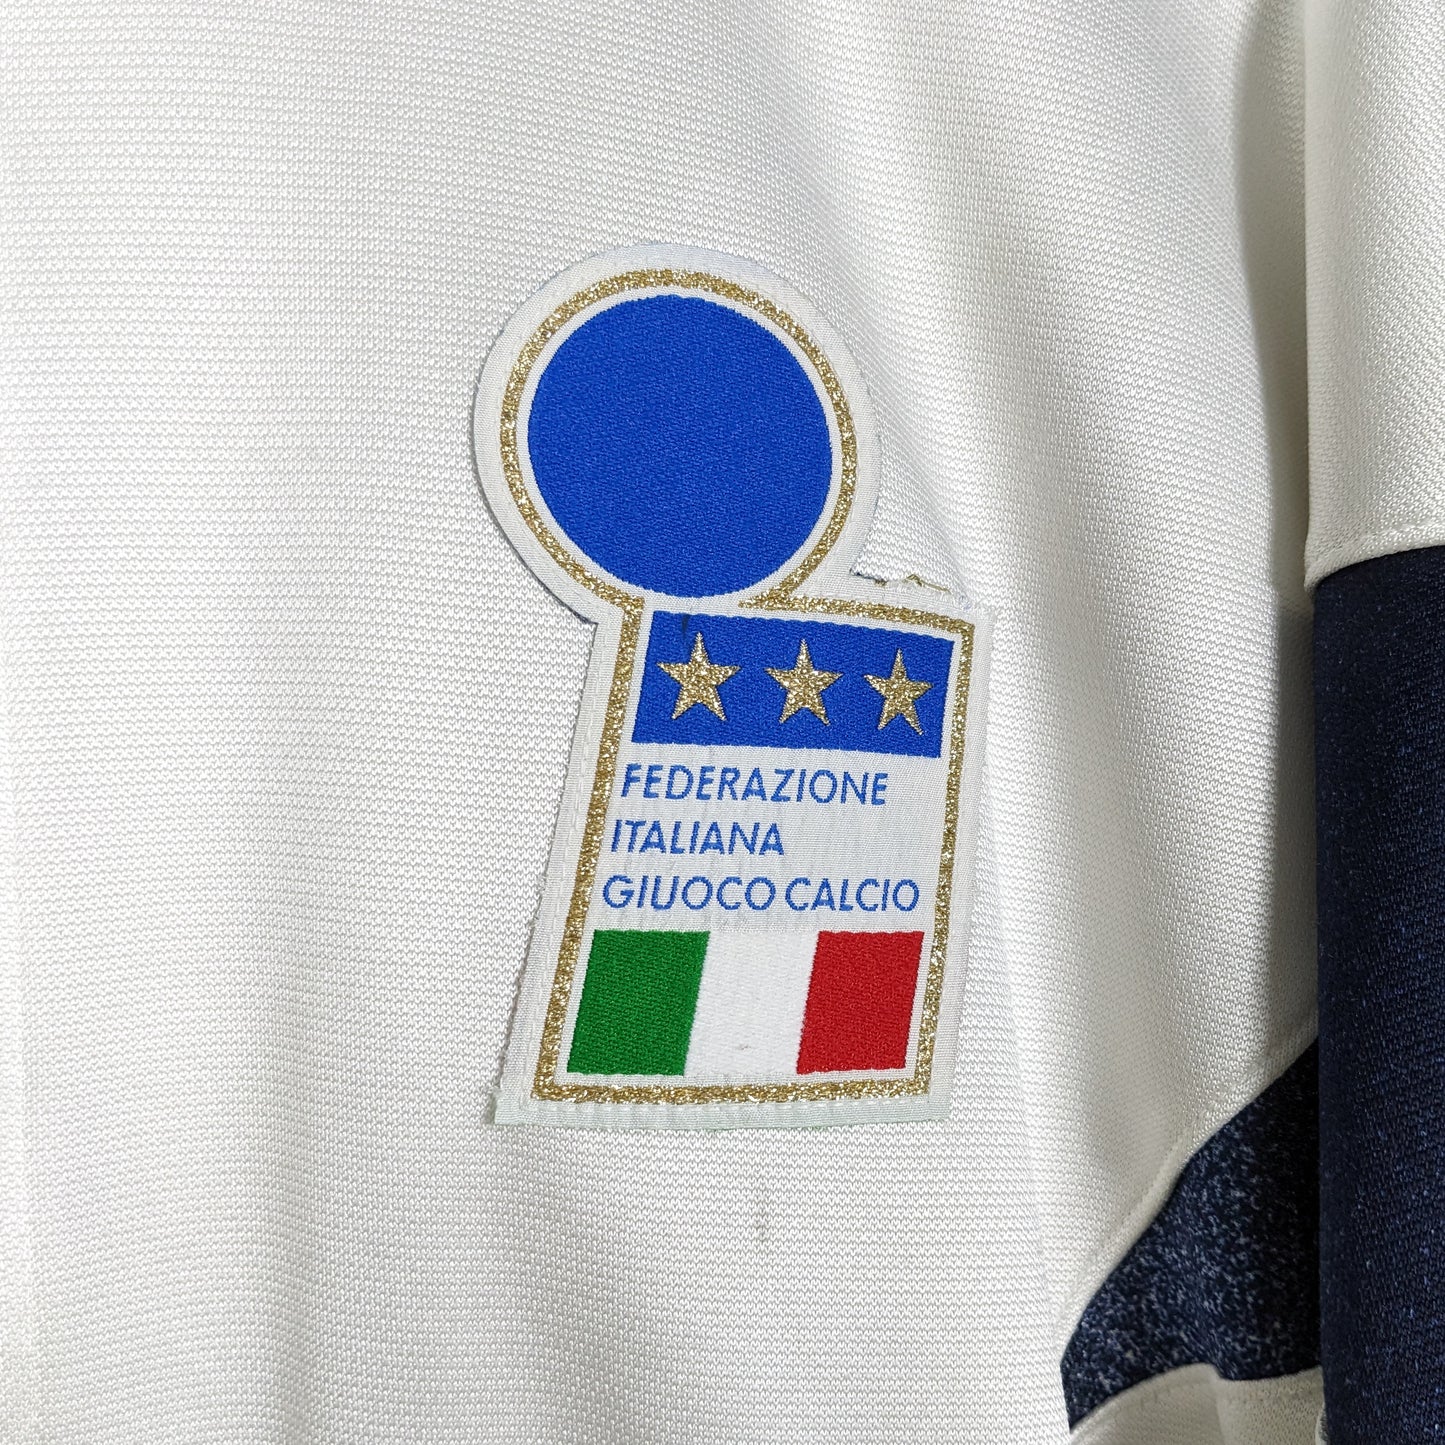 Authentic Italy 1993/94 Diadora Football Track Jacket - All size